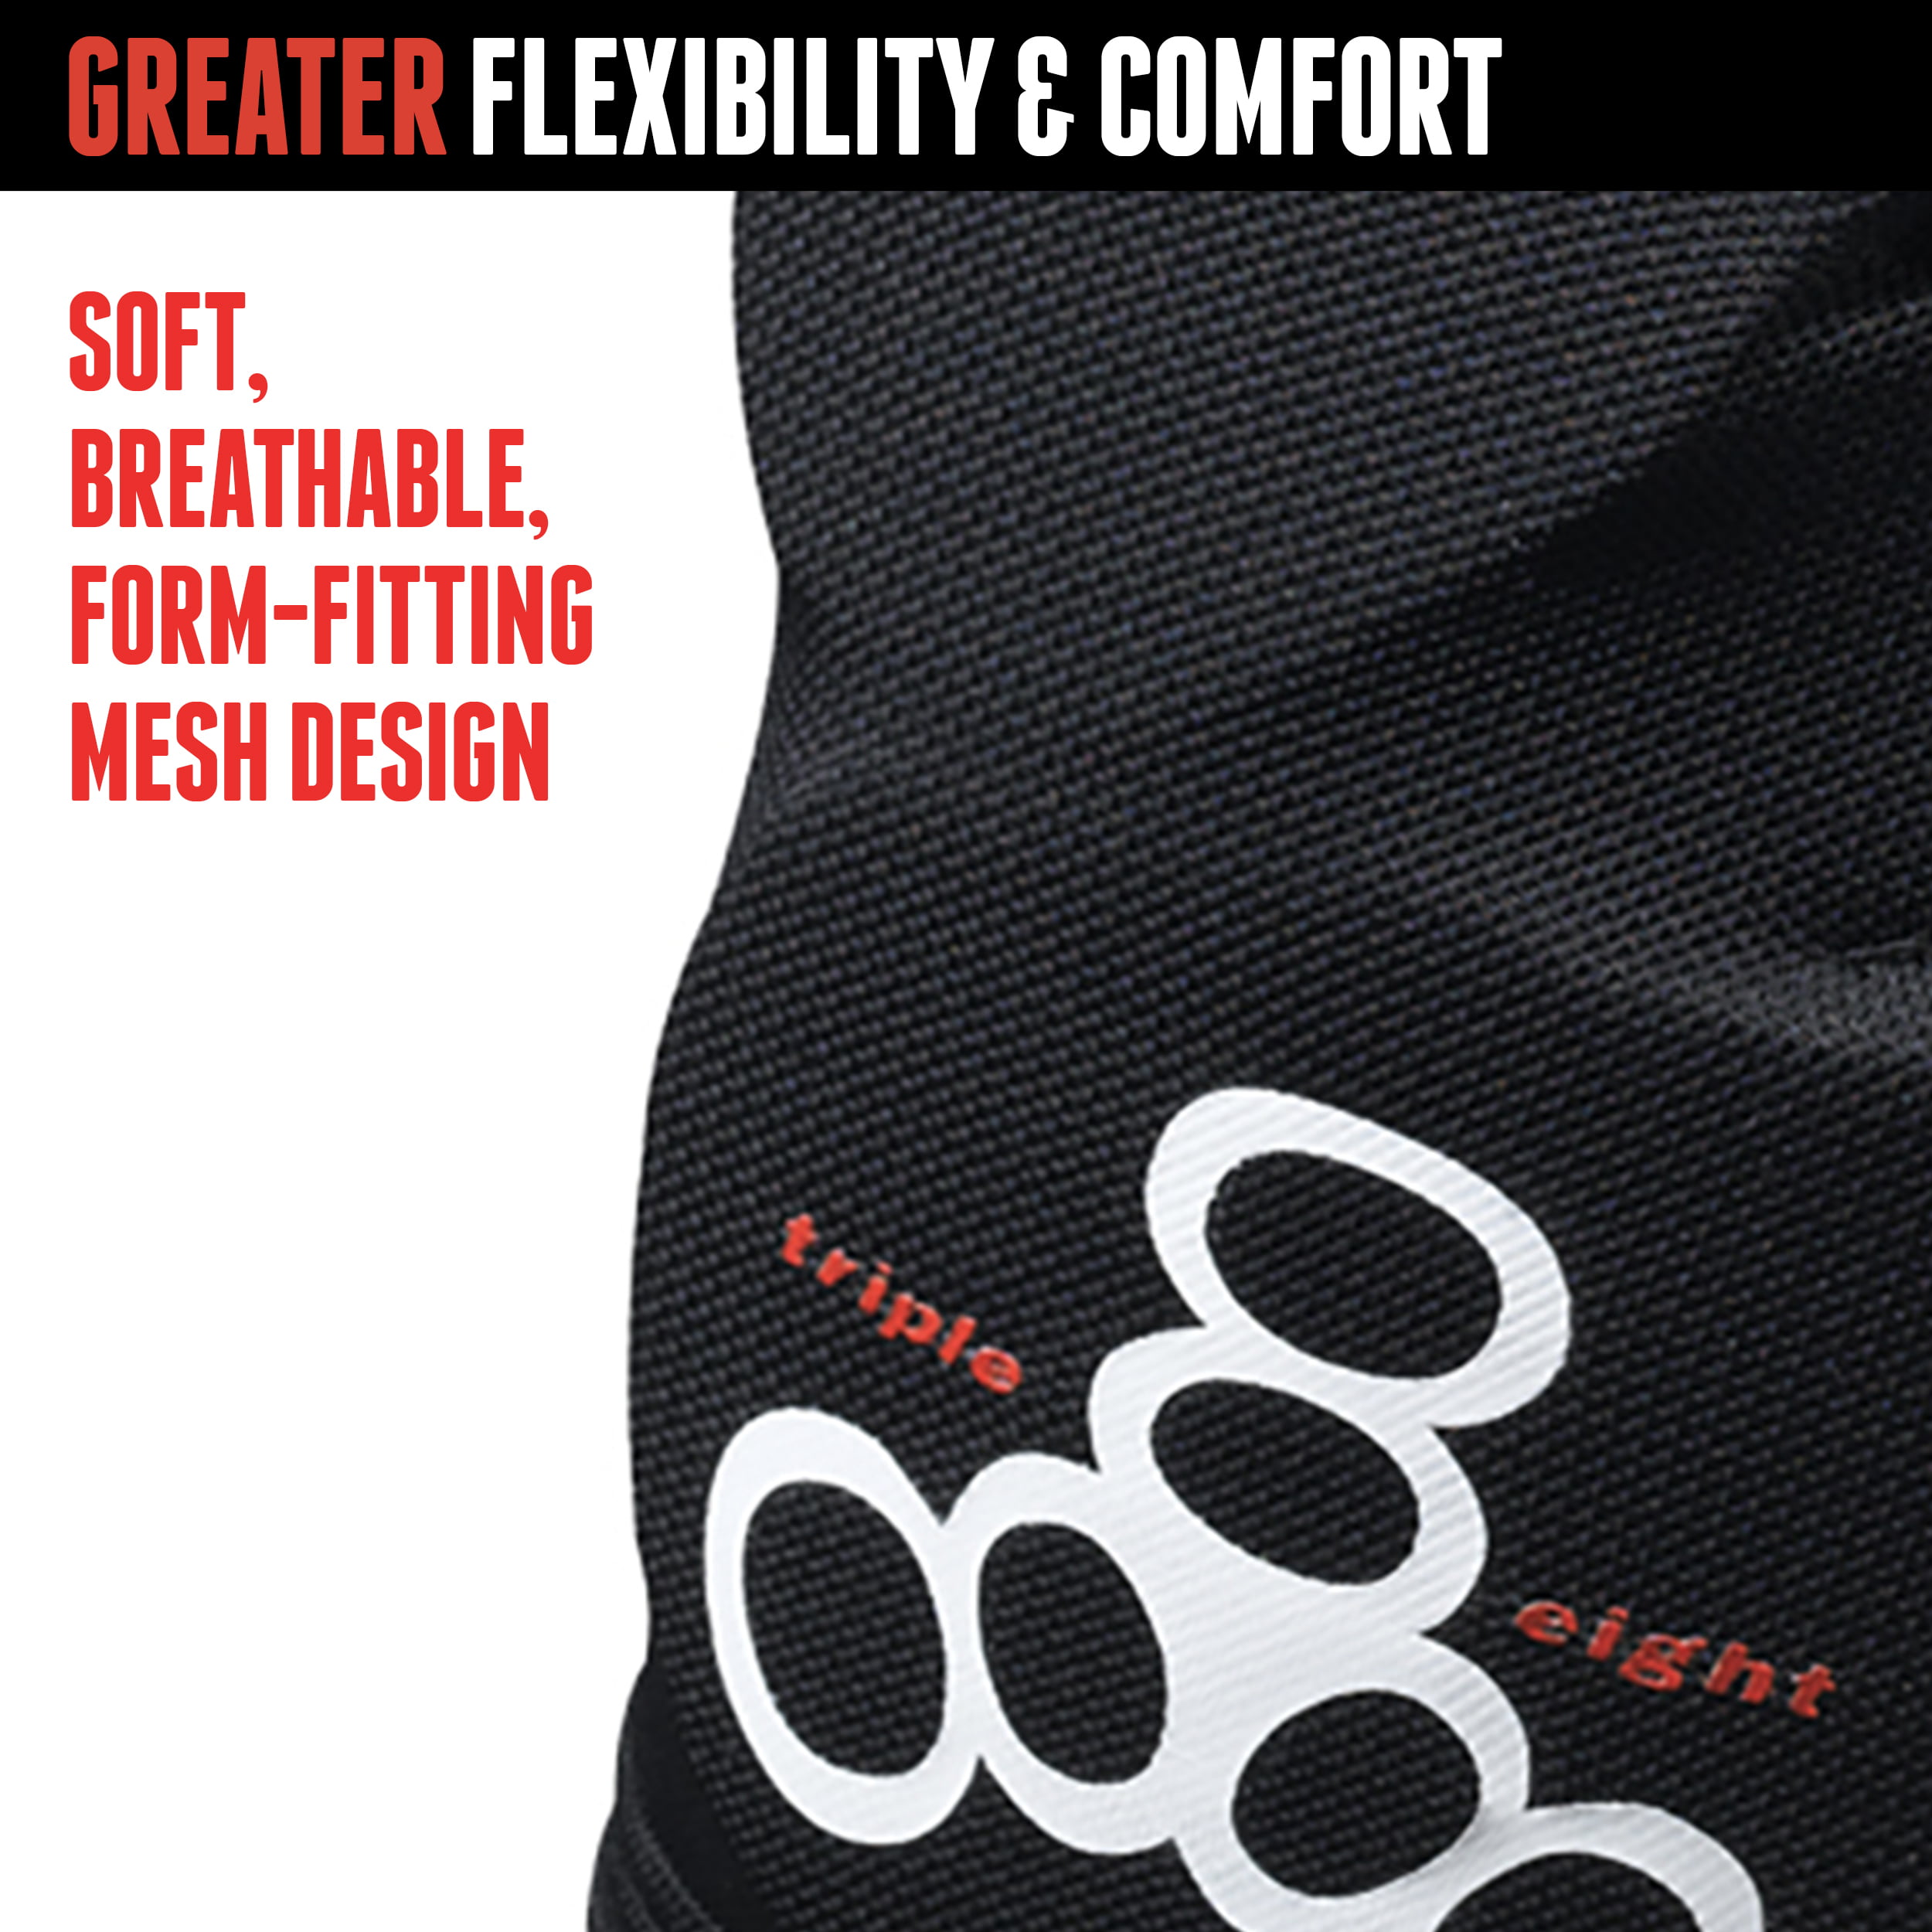 Black Triple 8 Protection Skate/BMX Bumsaver Protective Shorts